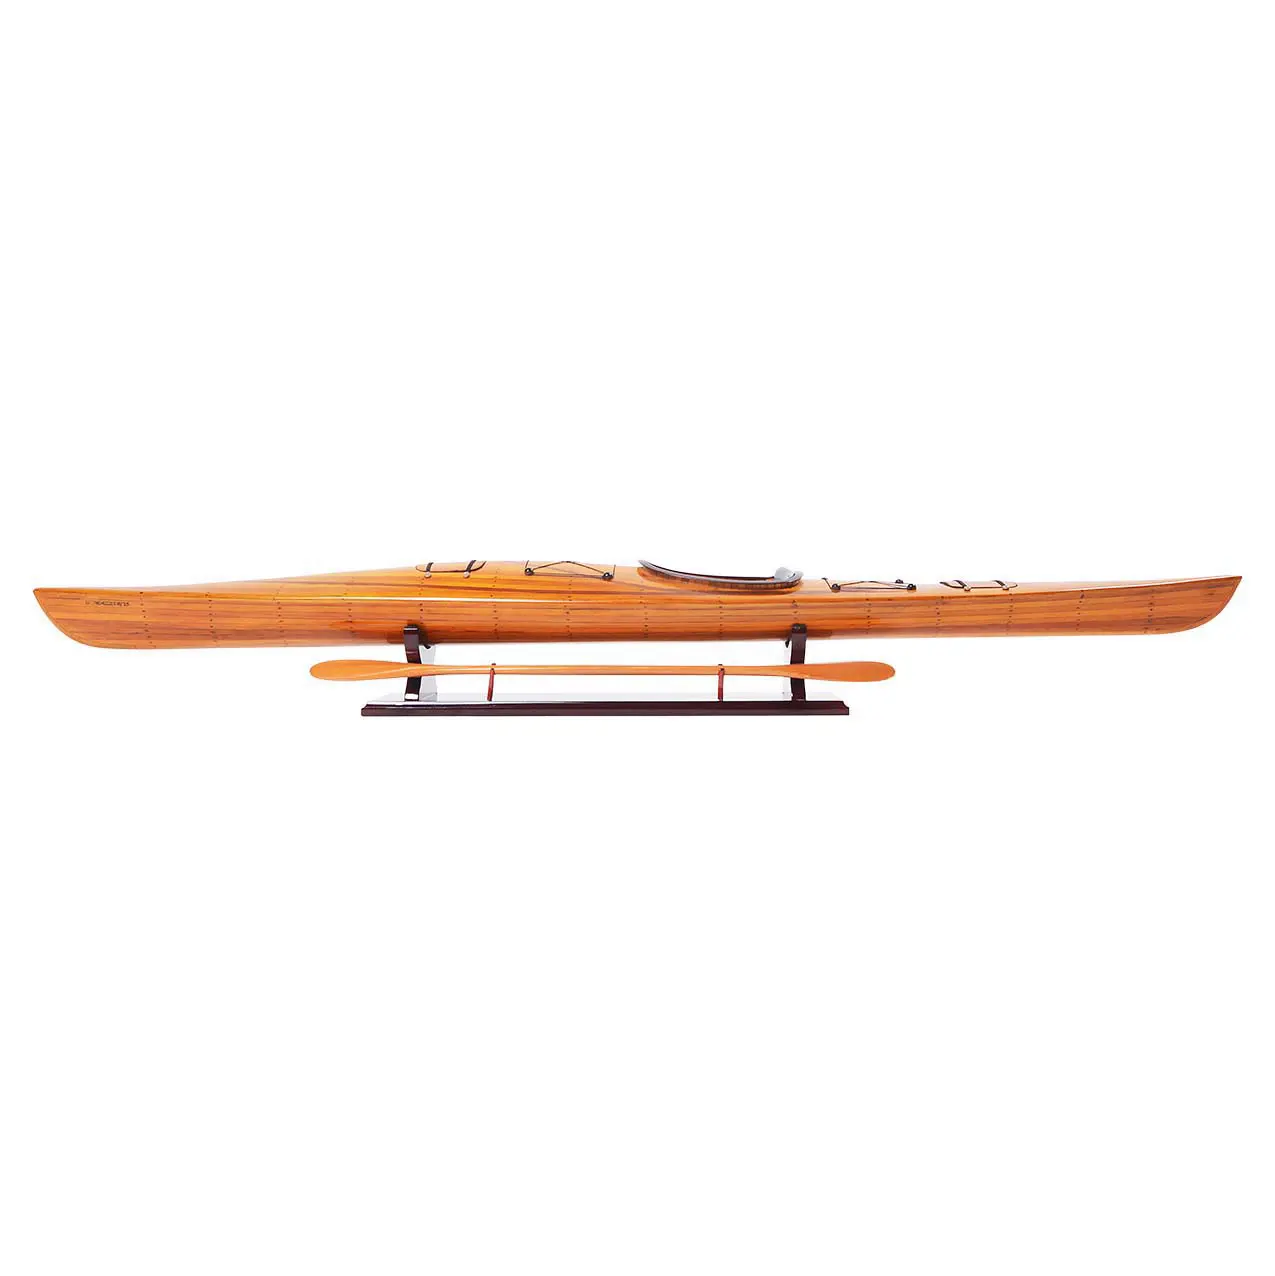 B078 Kayak Wooden Boat Model B078 KAYAK WOODEN BOAT MODEL L00.WEBP